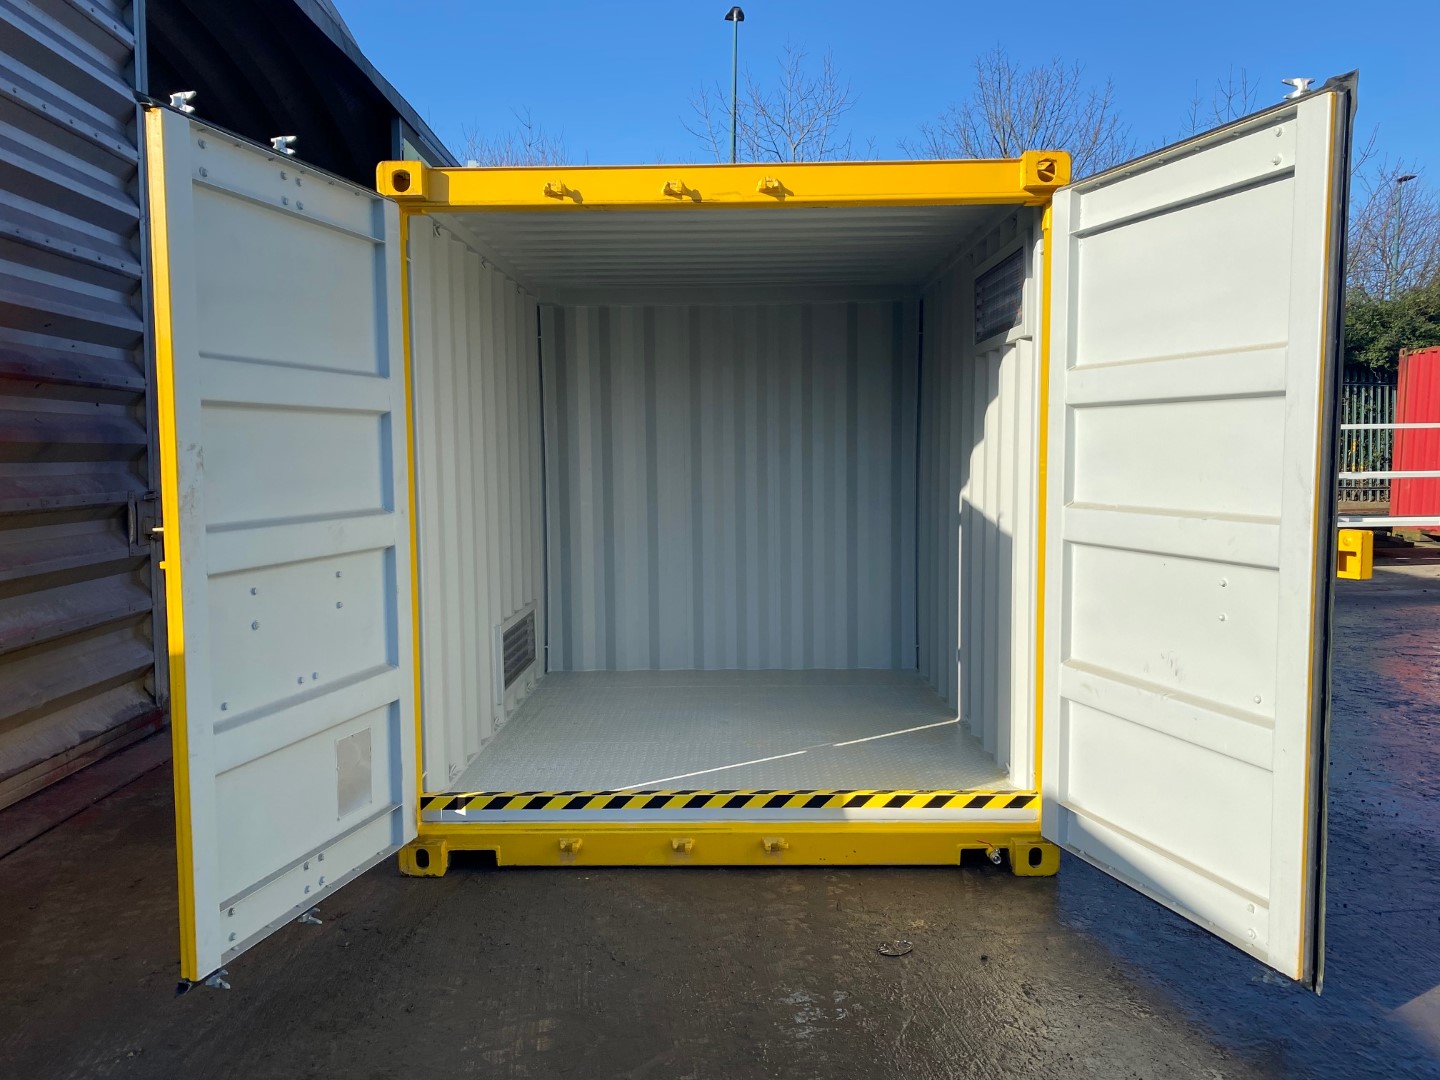 Providers of Hazardous Material Storage Solutions UK